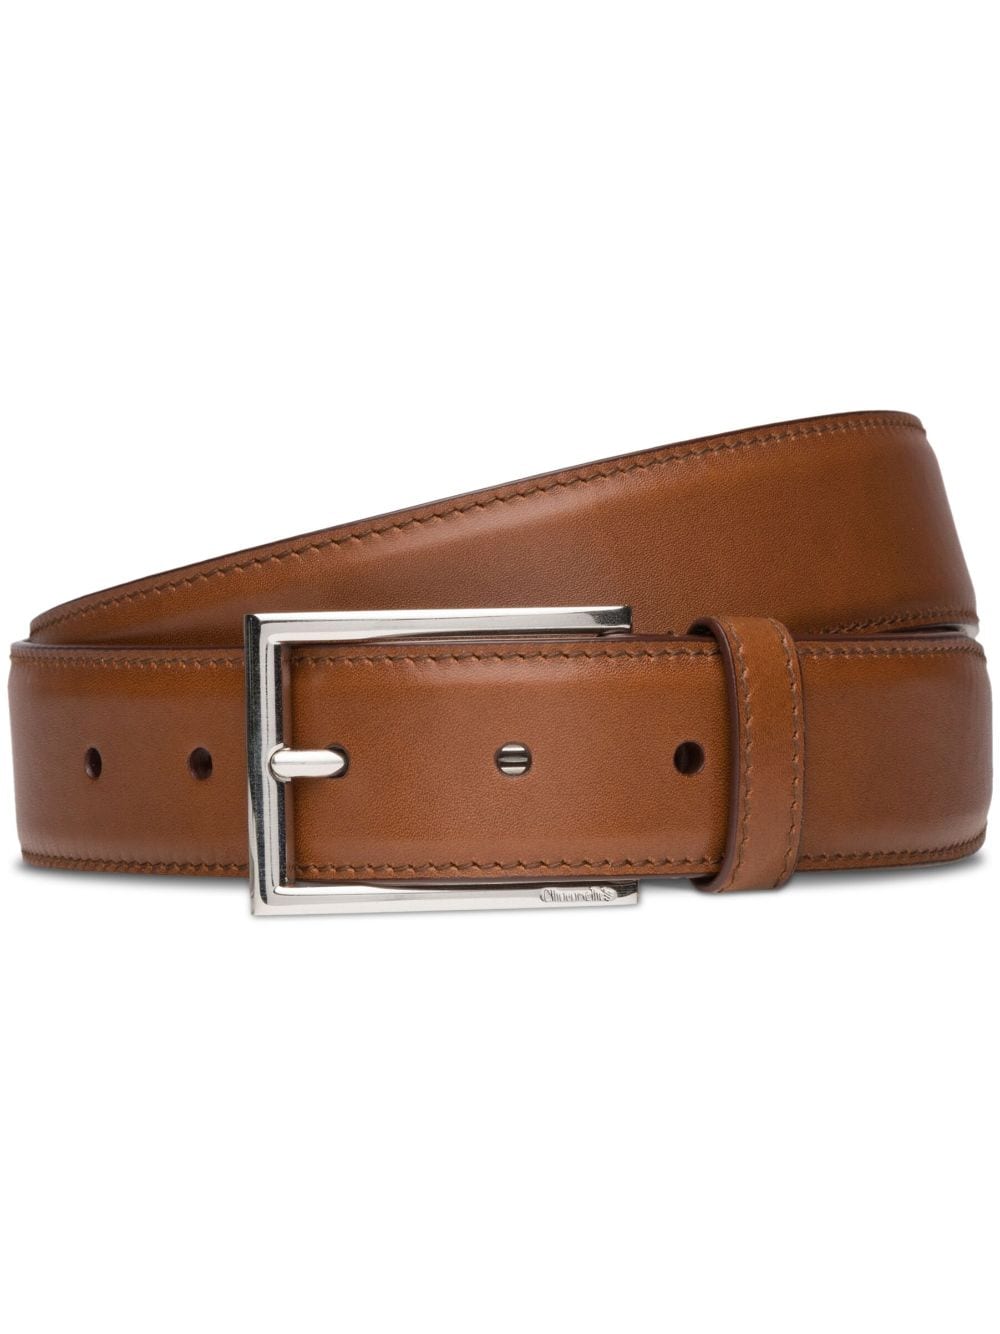 Nevada leather belt